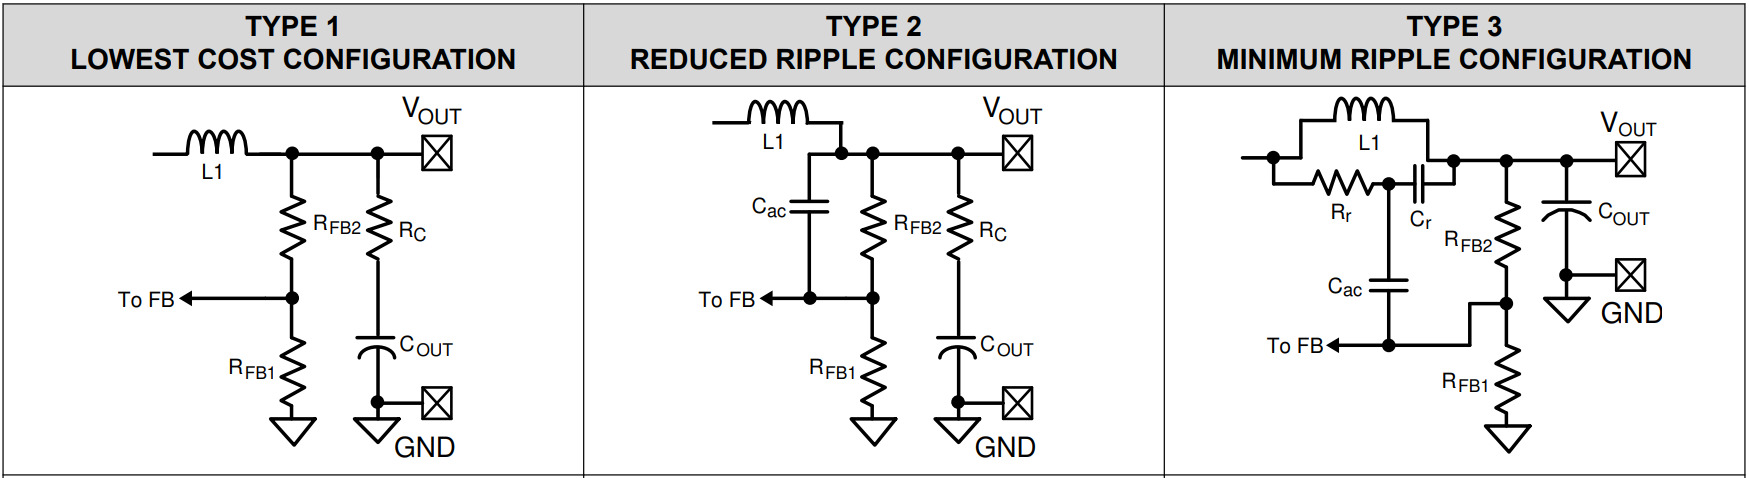 Ripple_Configuration